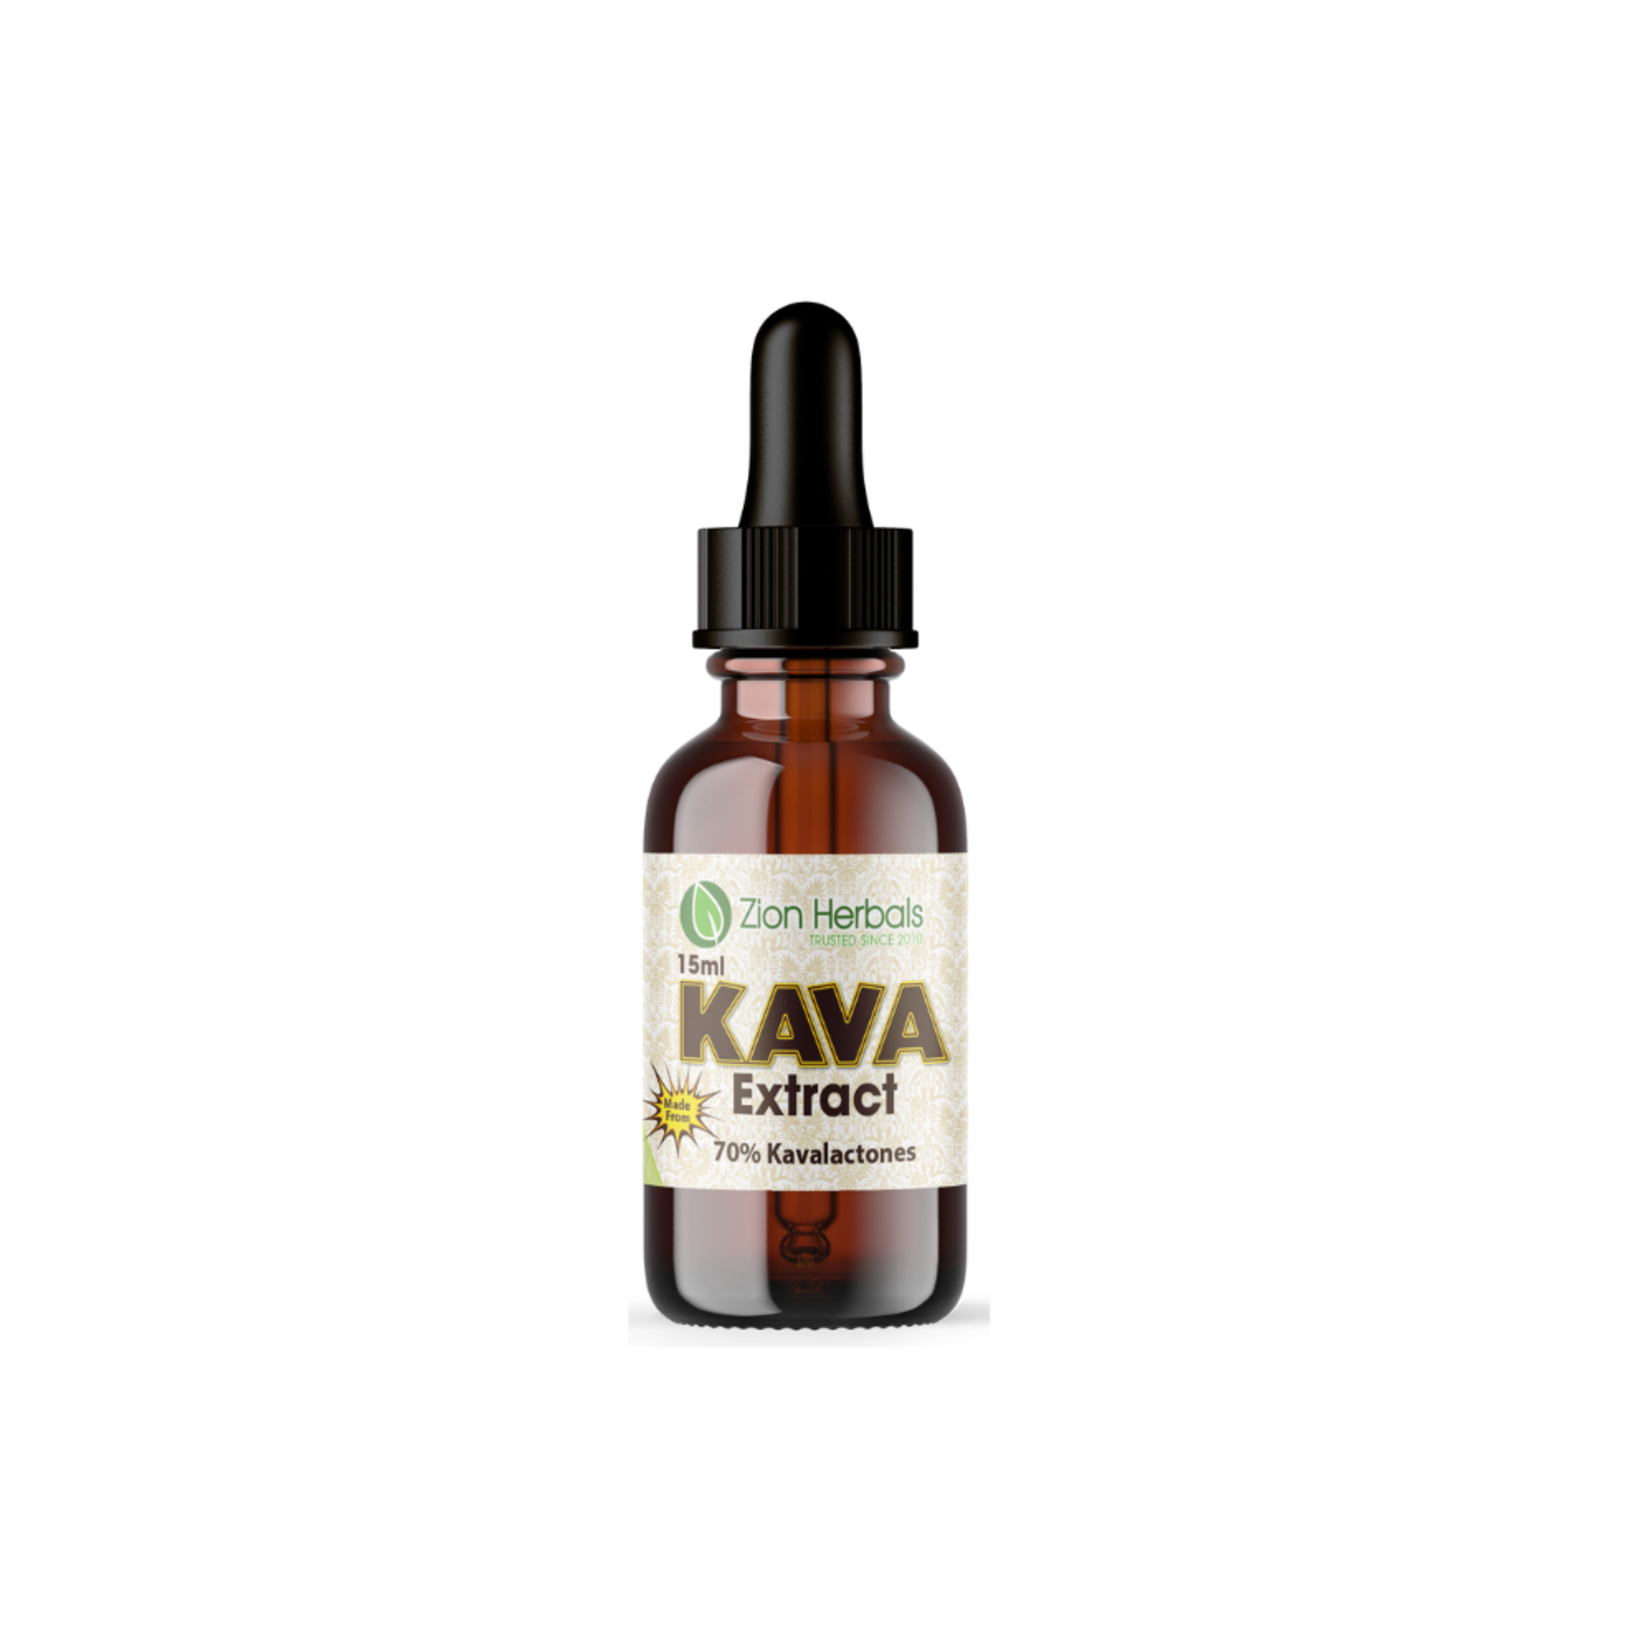 Zion Herbals Kava Extract Tincture